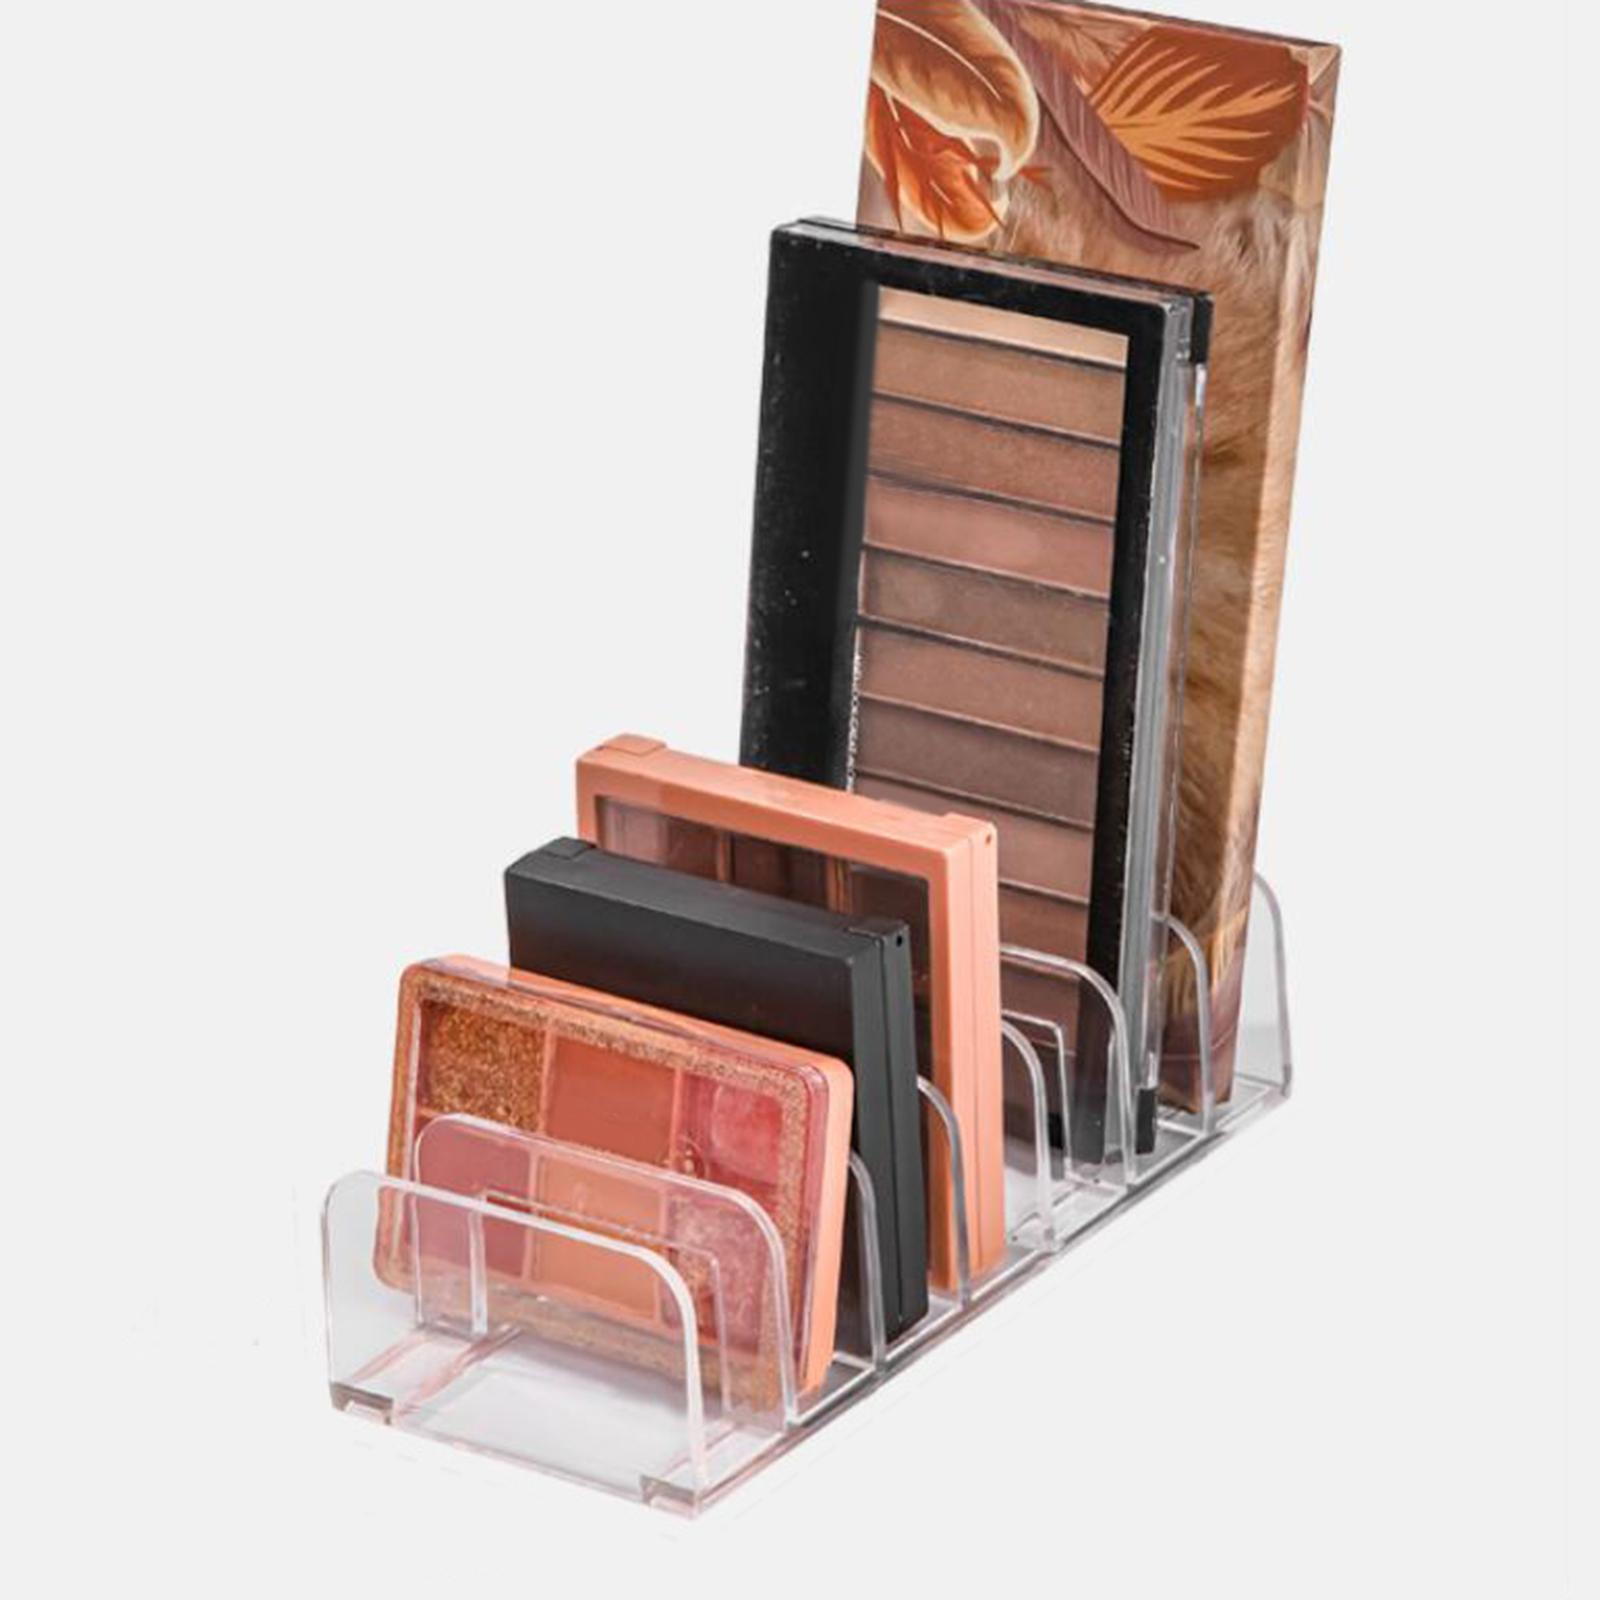 3x Sleek Modern 7-Section Divided Makeup Organizer, Eyeshadow Palettes Blush Kit Holder, for Dresser Vanity Countertops Acrylic